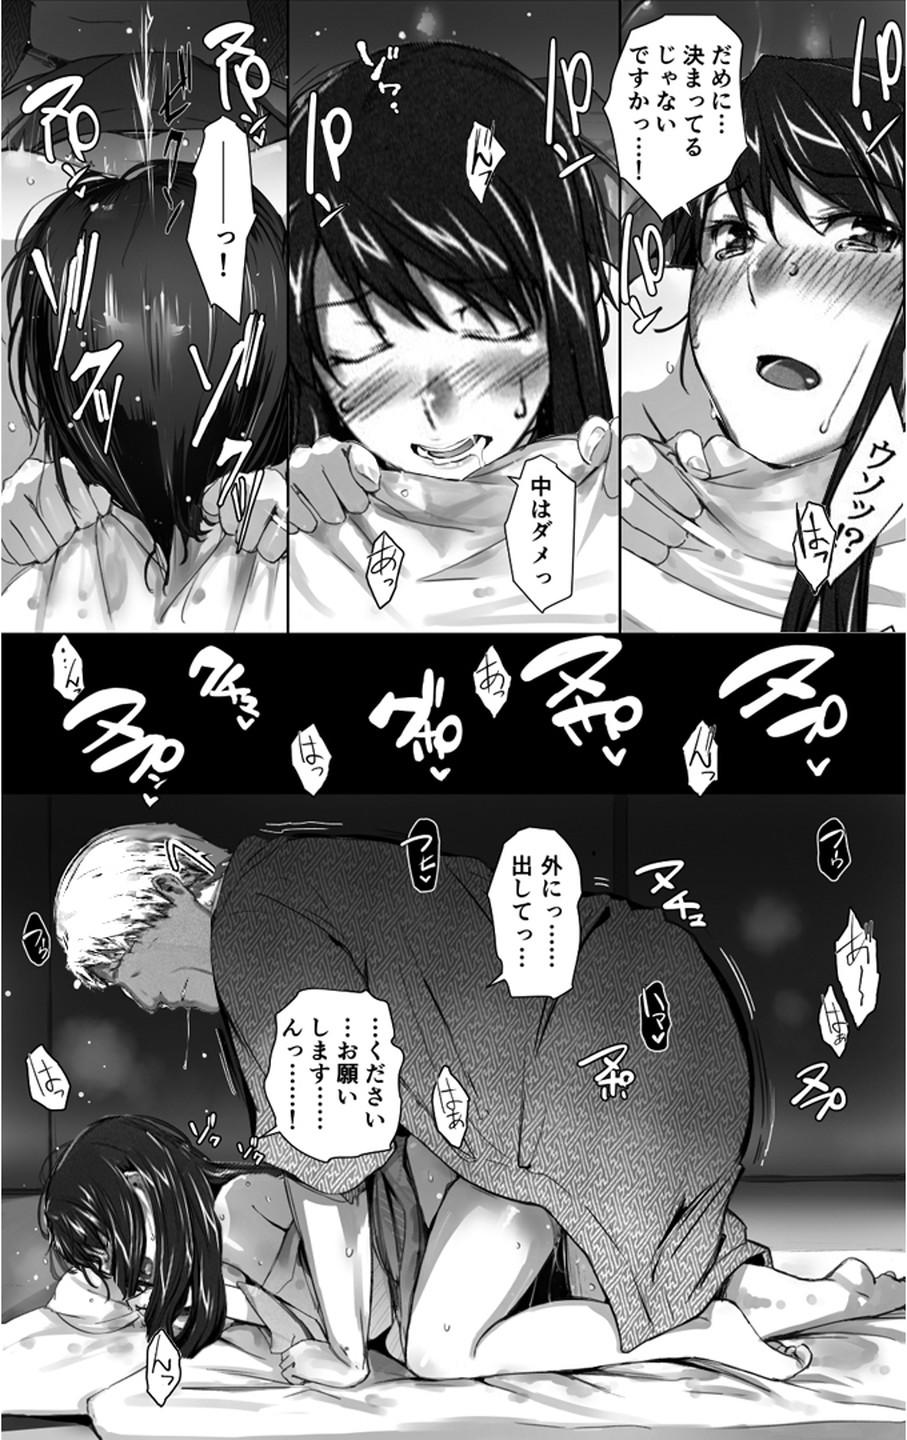 Sakiko-san in delusion Vol.1 Ver.1.1 ~Sakiko-san's circumstance at an educational training~ Stupid Sakiko (collage) on-going 13